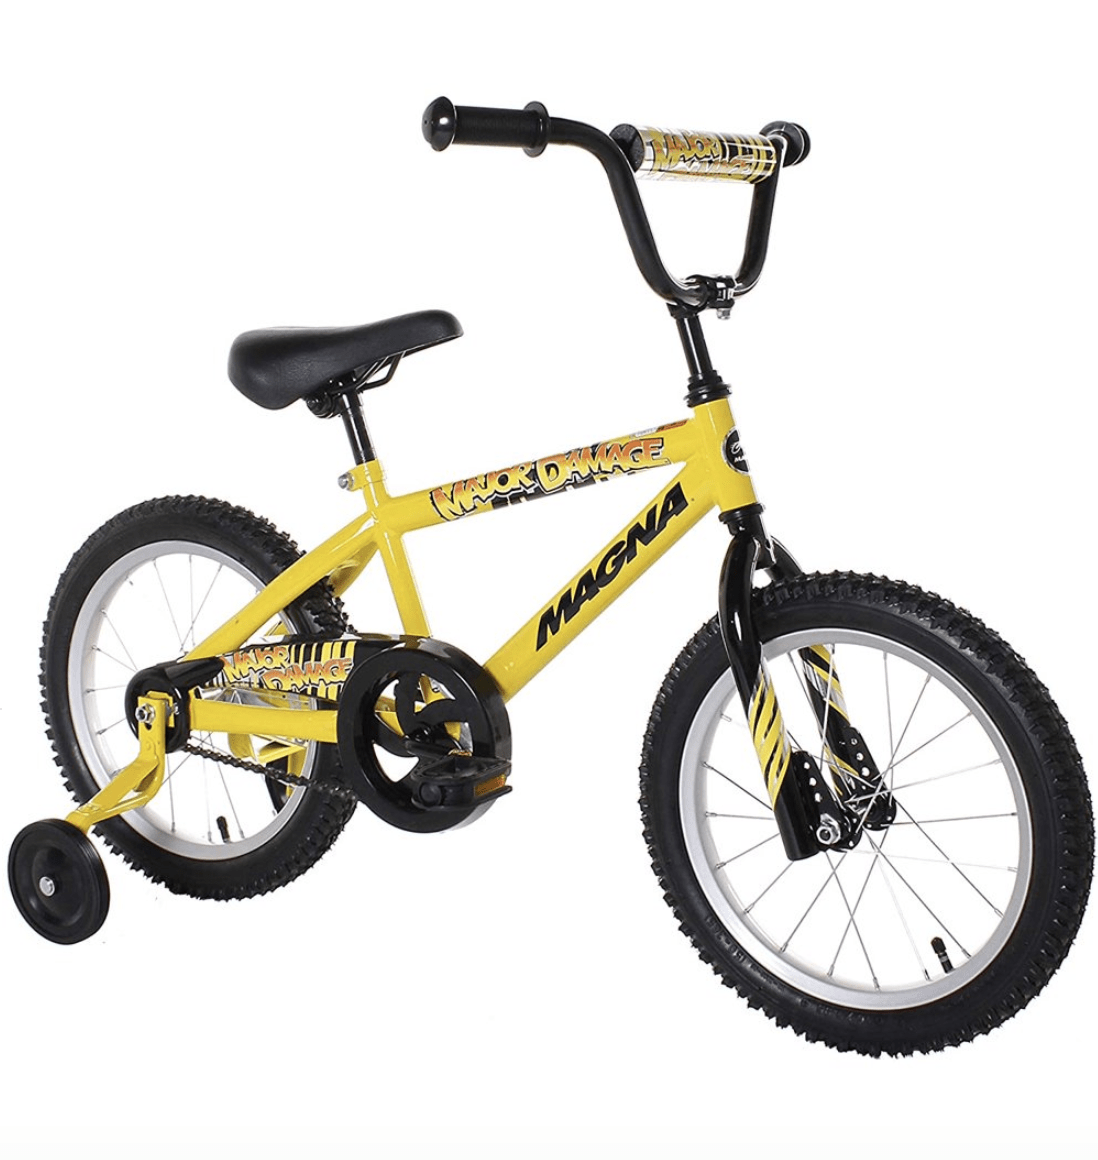 18" Hot Wheels Boy BMX Street Bike Dirt Bicycle Metal Frame w/ Hand Brake Yellow 